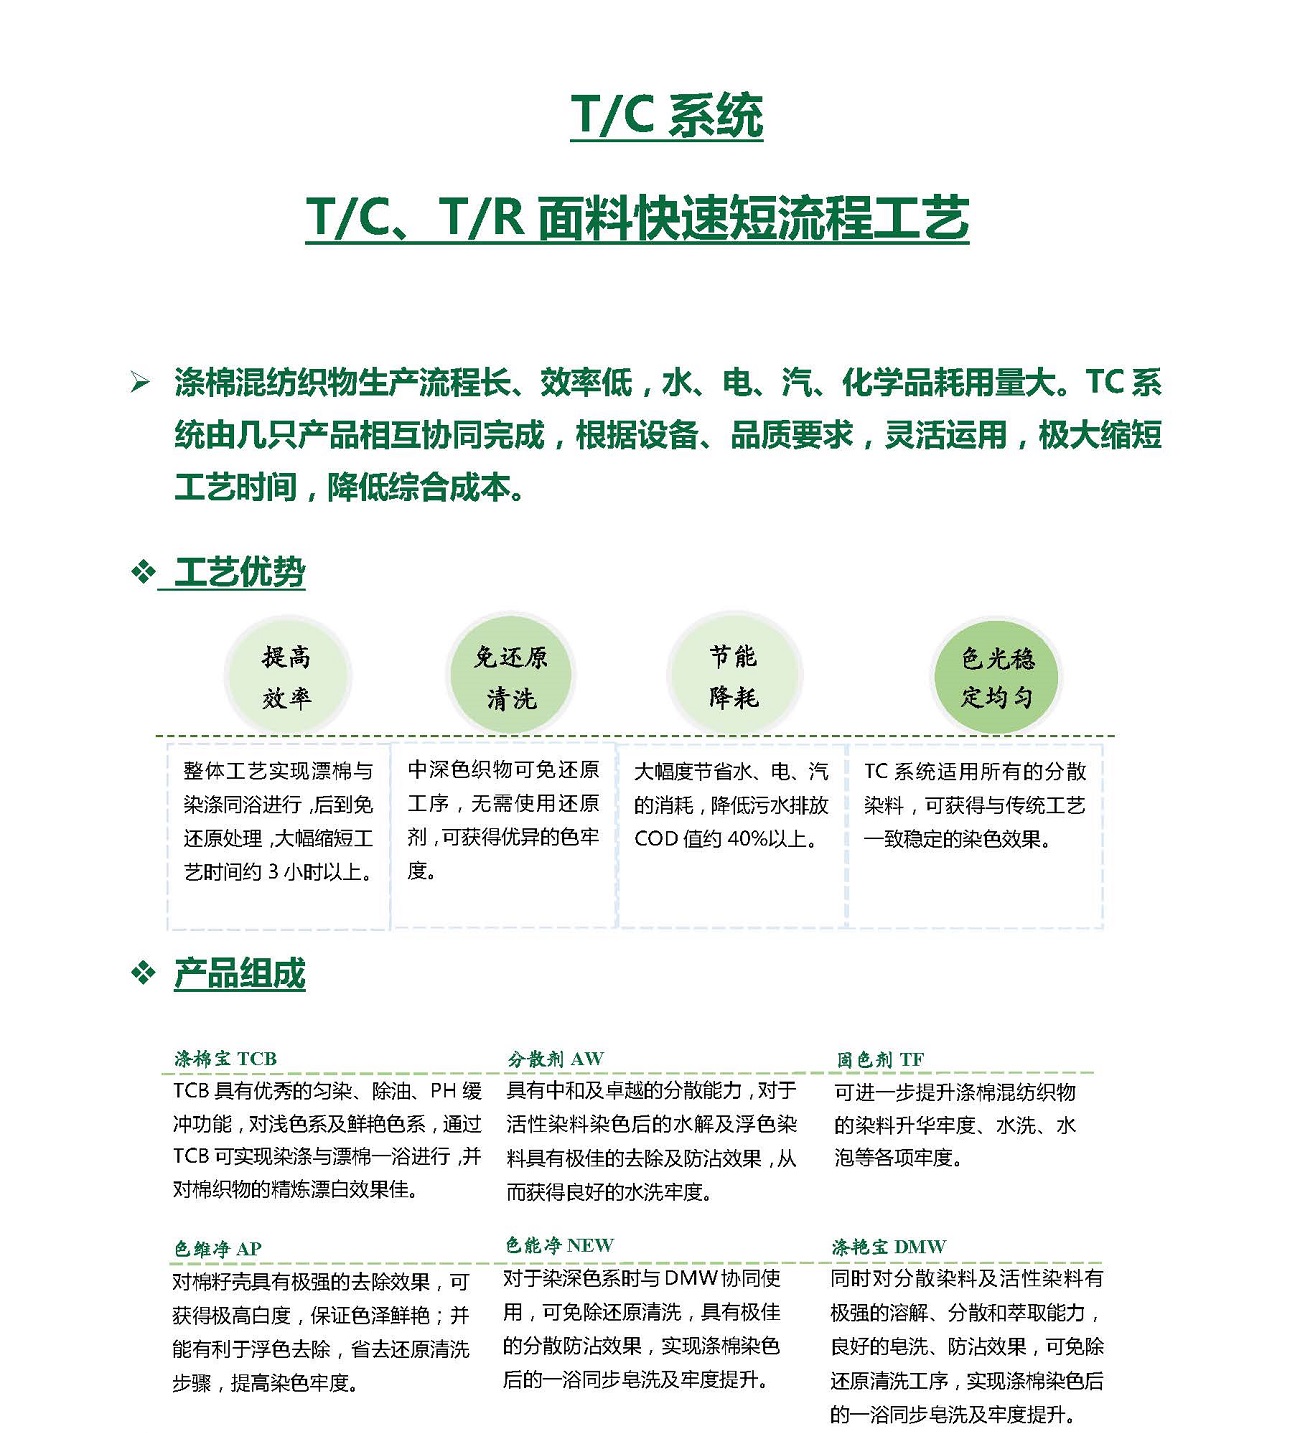 T/C、T/R面料快速短流程工艺—TC系统